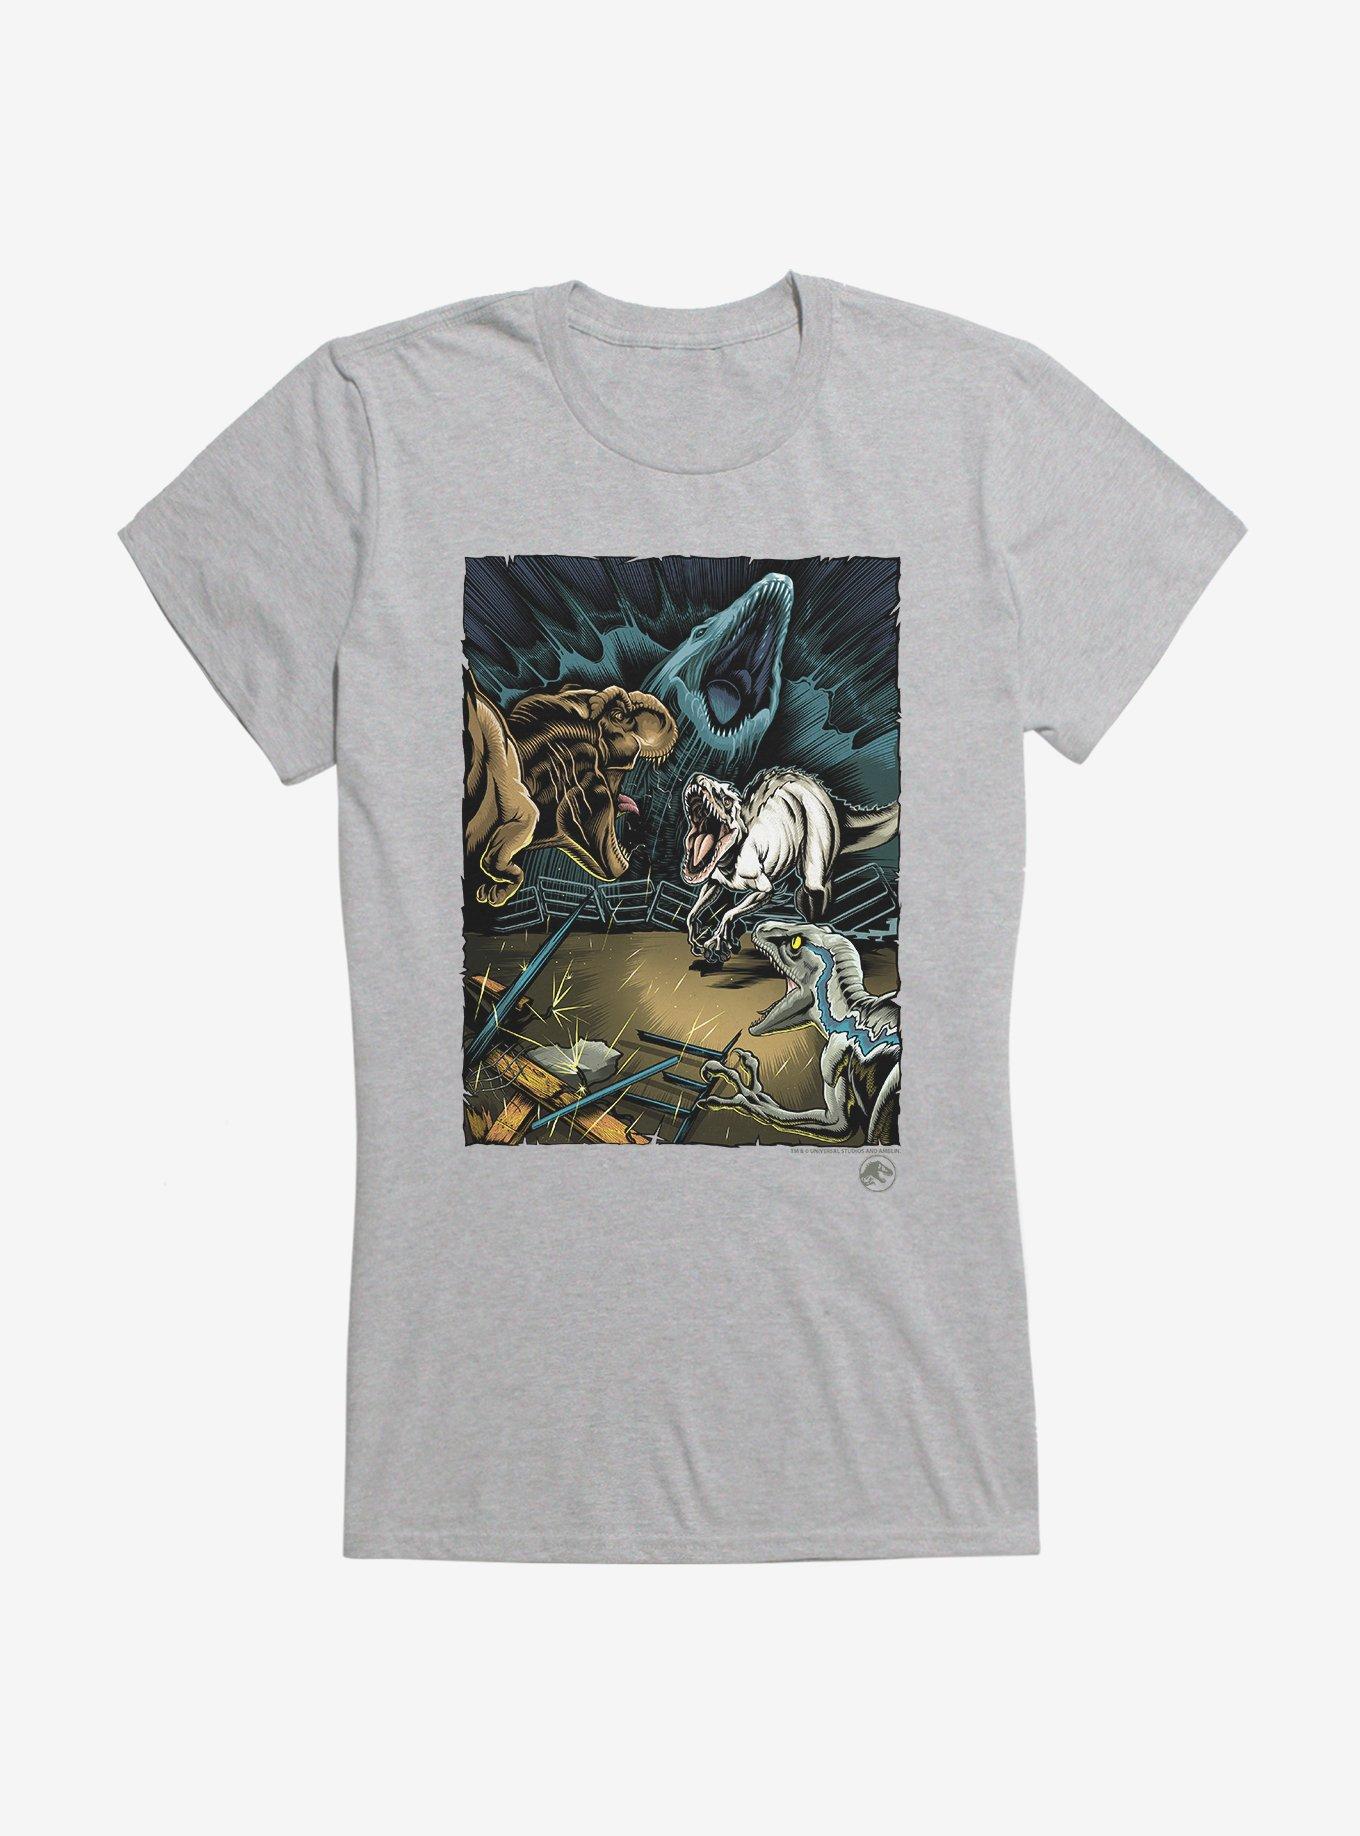 Jurassic World Dinosaur Battle Girls T-Shirt | Hot Topic